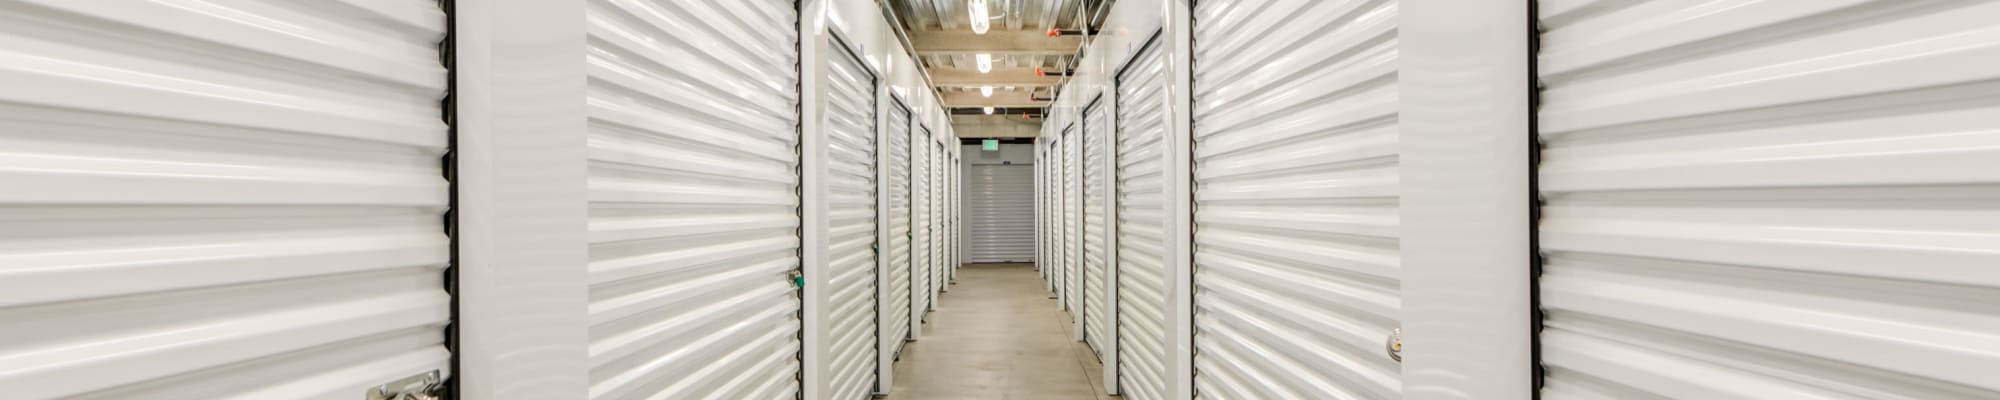 Chatsworth CA storage features